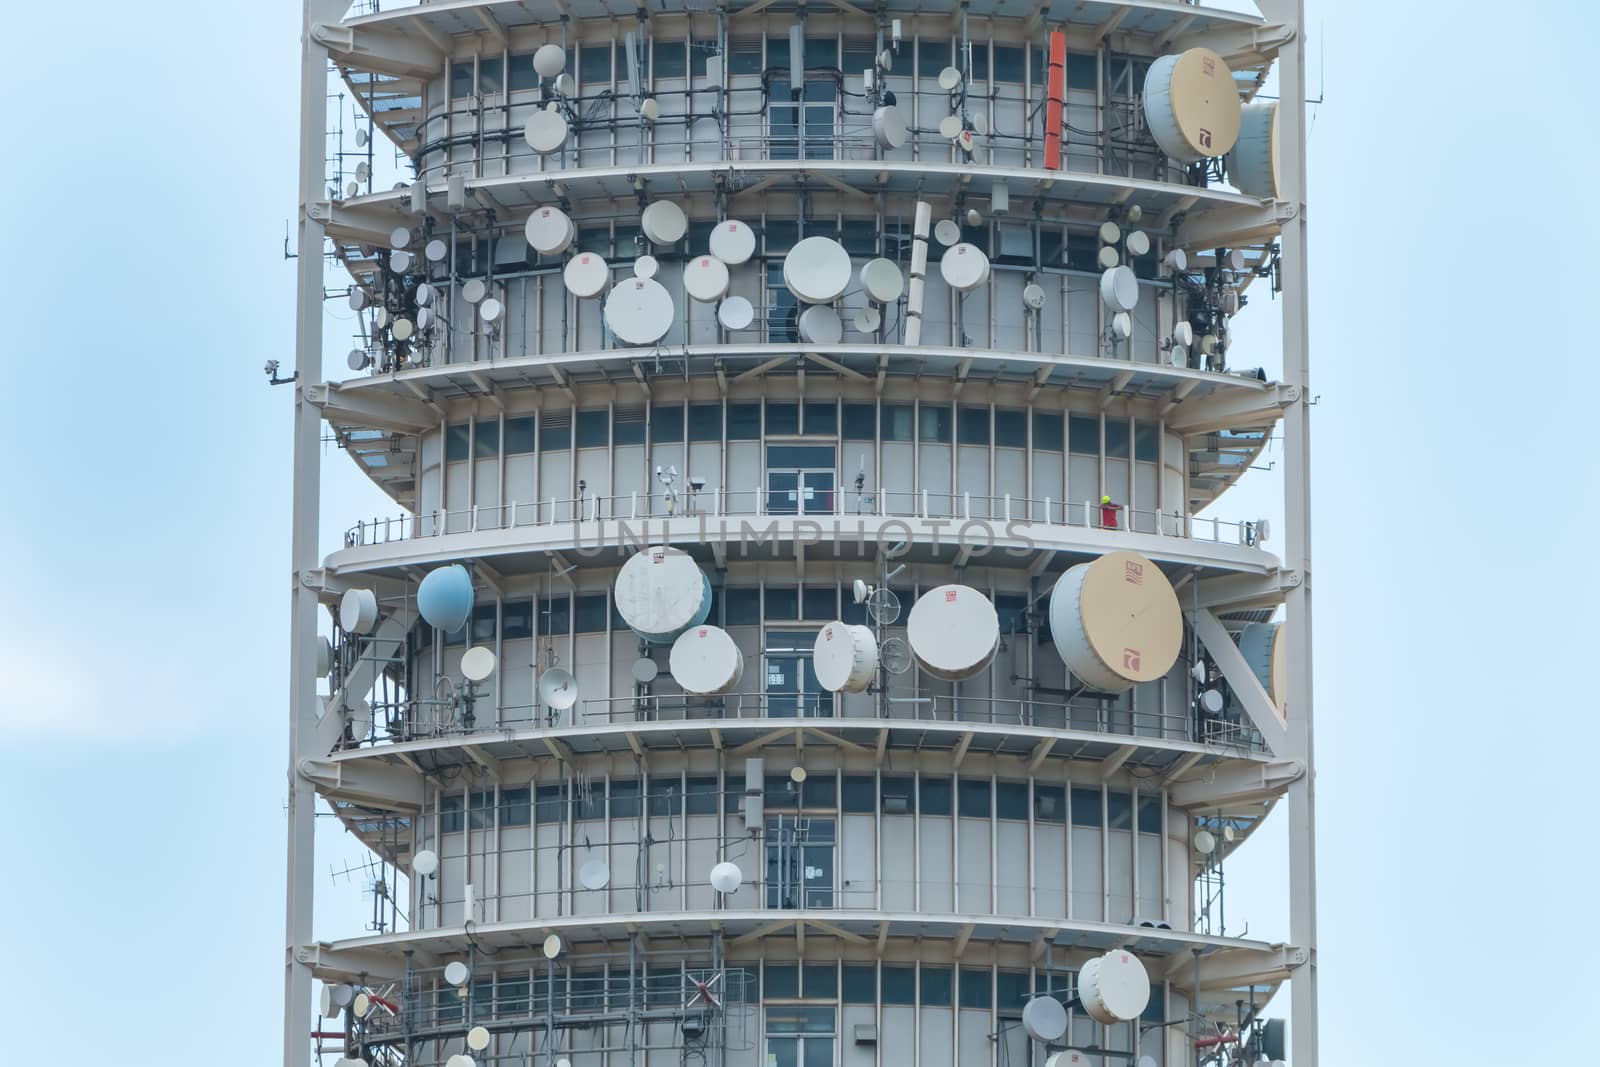 Collserola telecommunications tower on the heights of Barcelona, by AtlanticEUROSTOXX